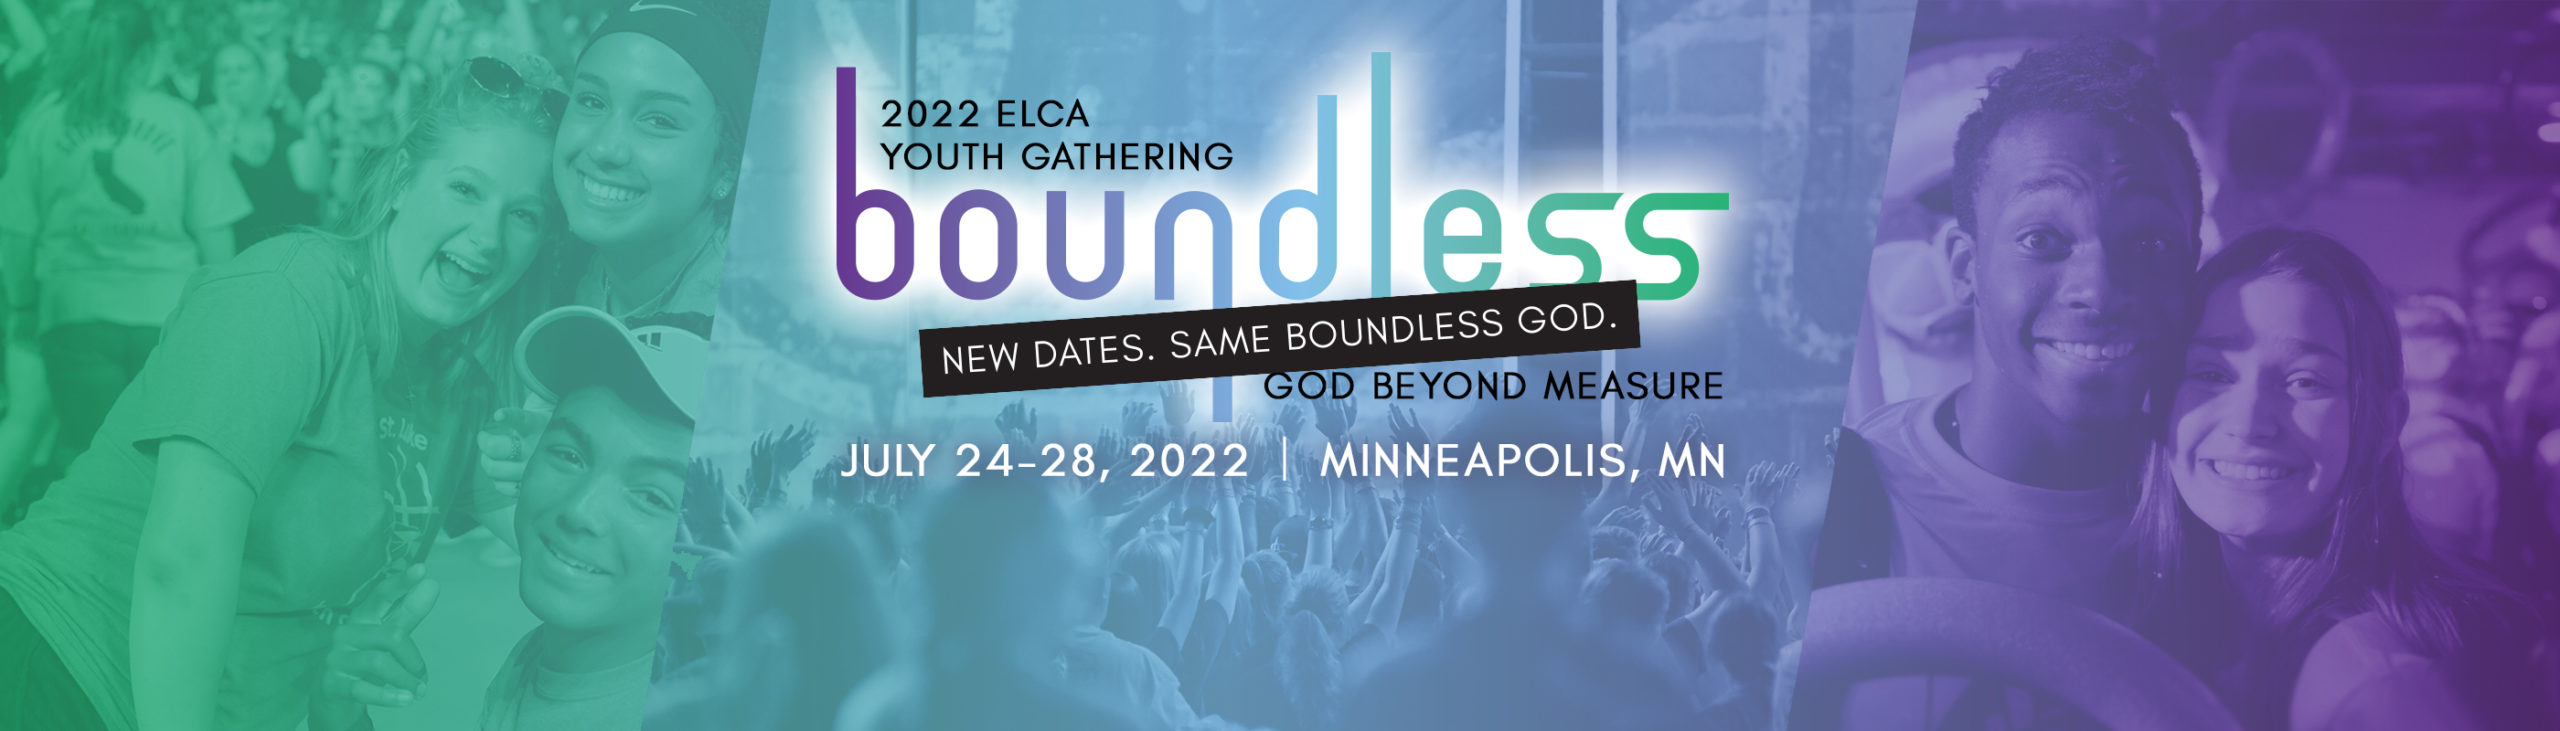 Elca Calendar 2022 Elca Youth Gathering – Boundless – God Beyond Measure | Gulf Coast Synod